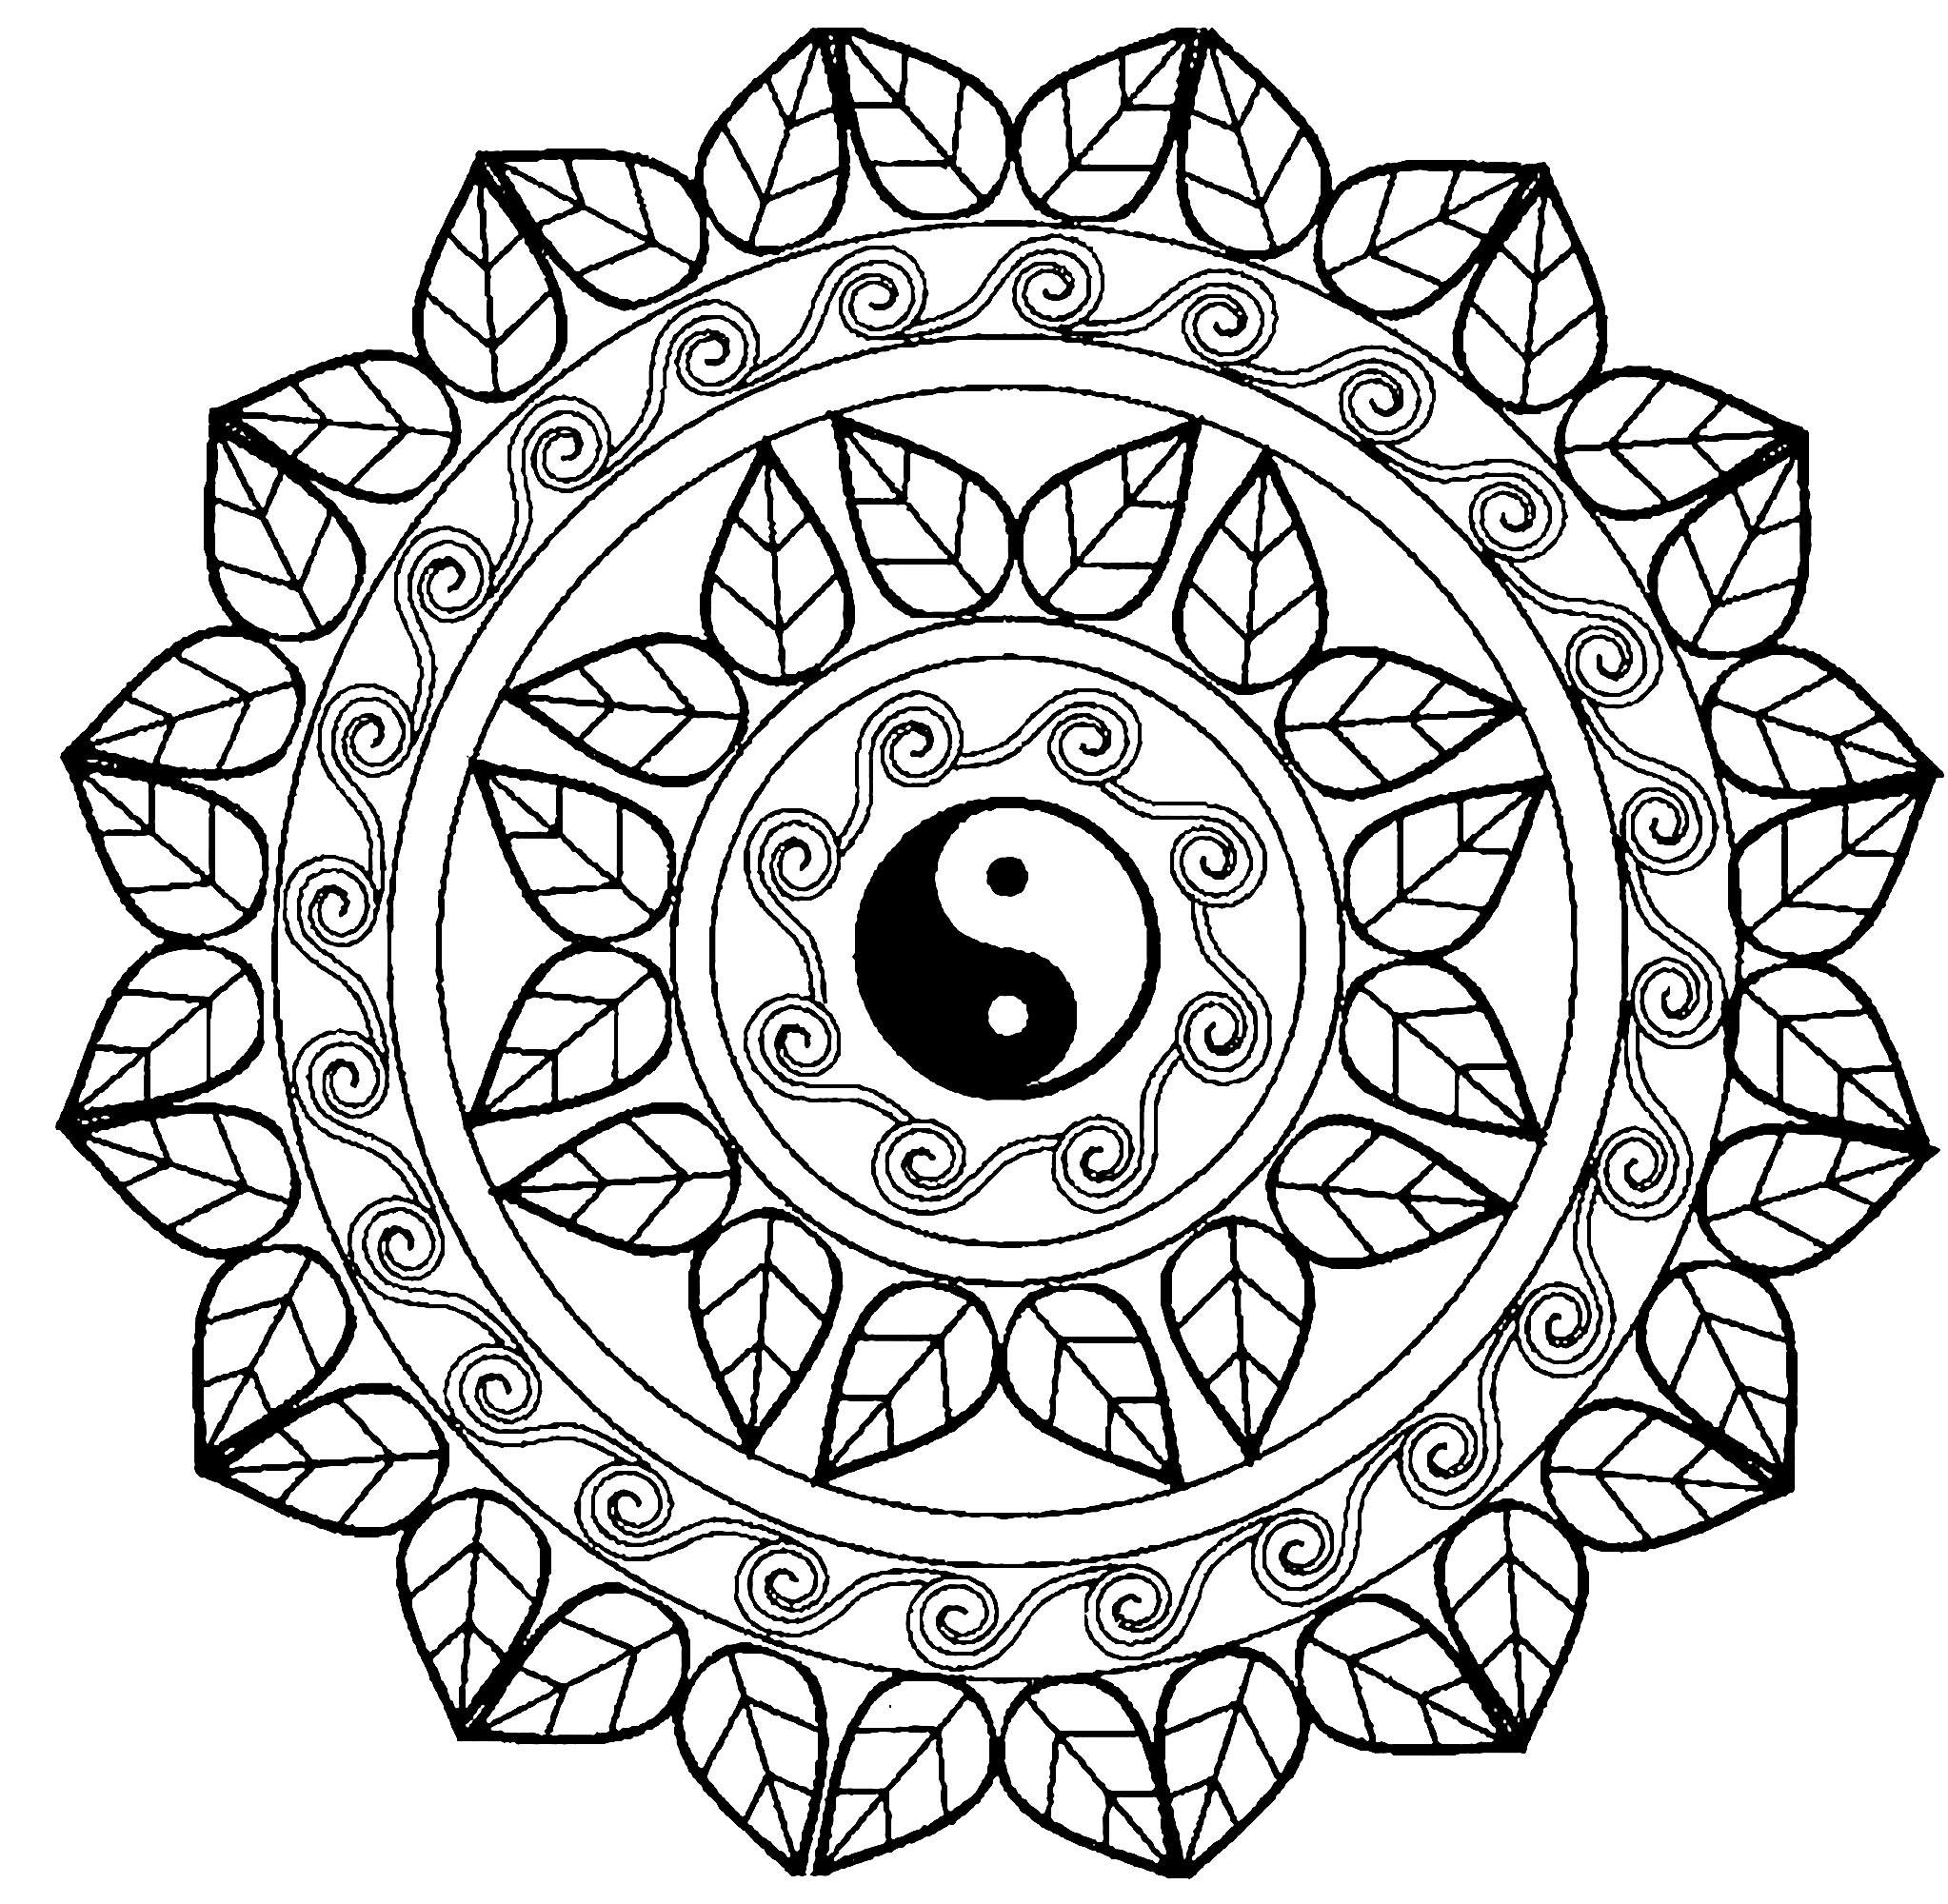 Escolha a técnica que prefere para colorir esta Mandala exclusiva com o famoso símbolo Yin & Yang no centro! Dê a sua alma a esta bela Mandala.